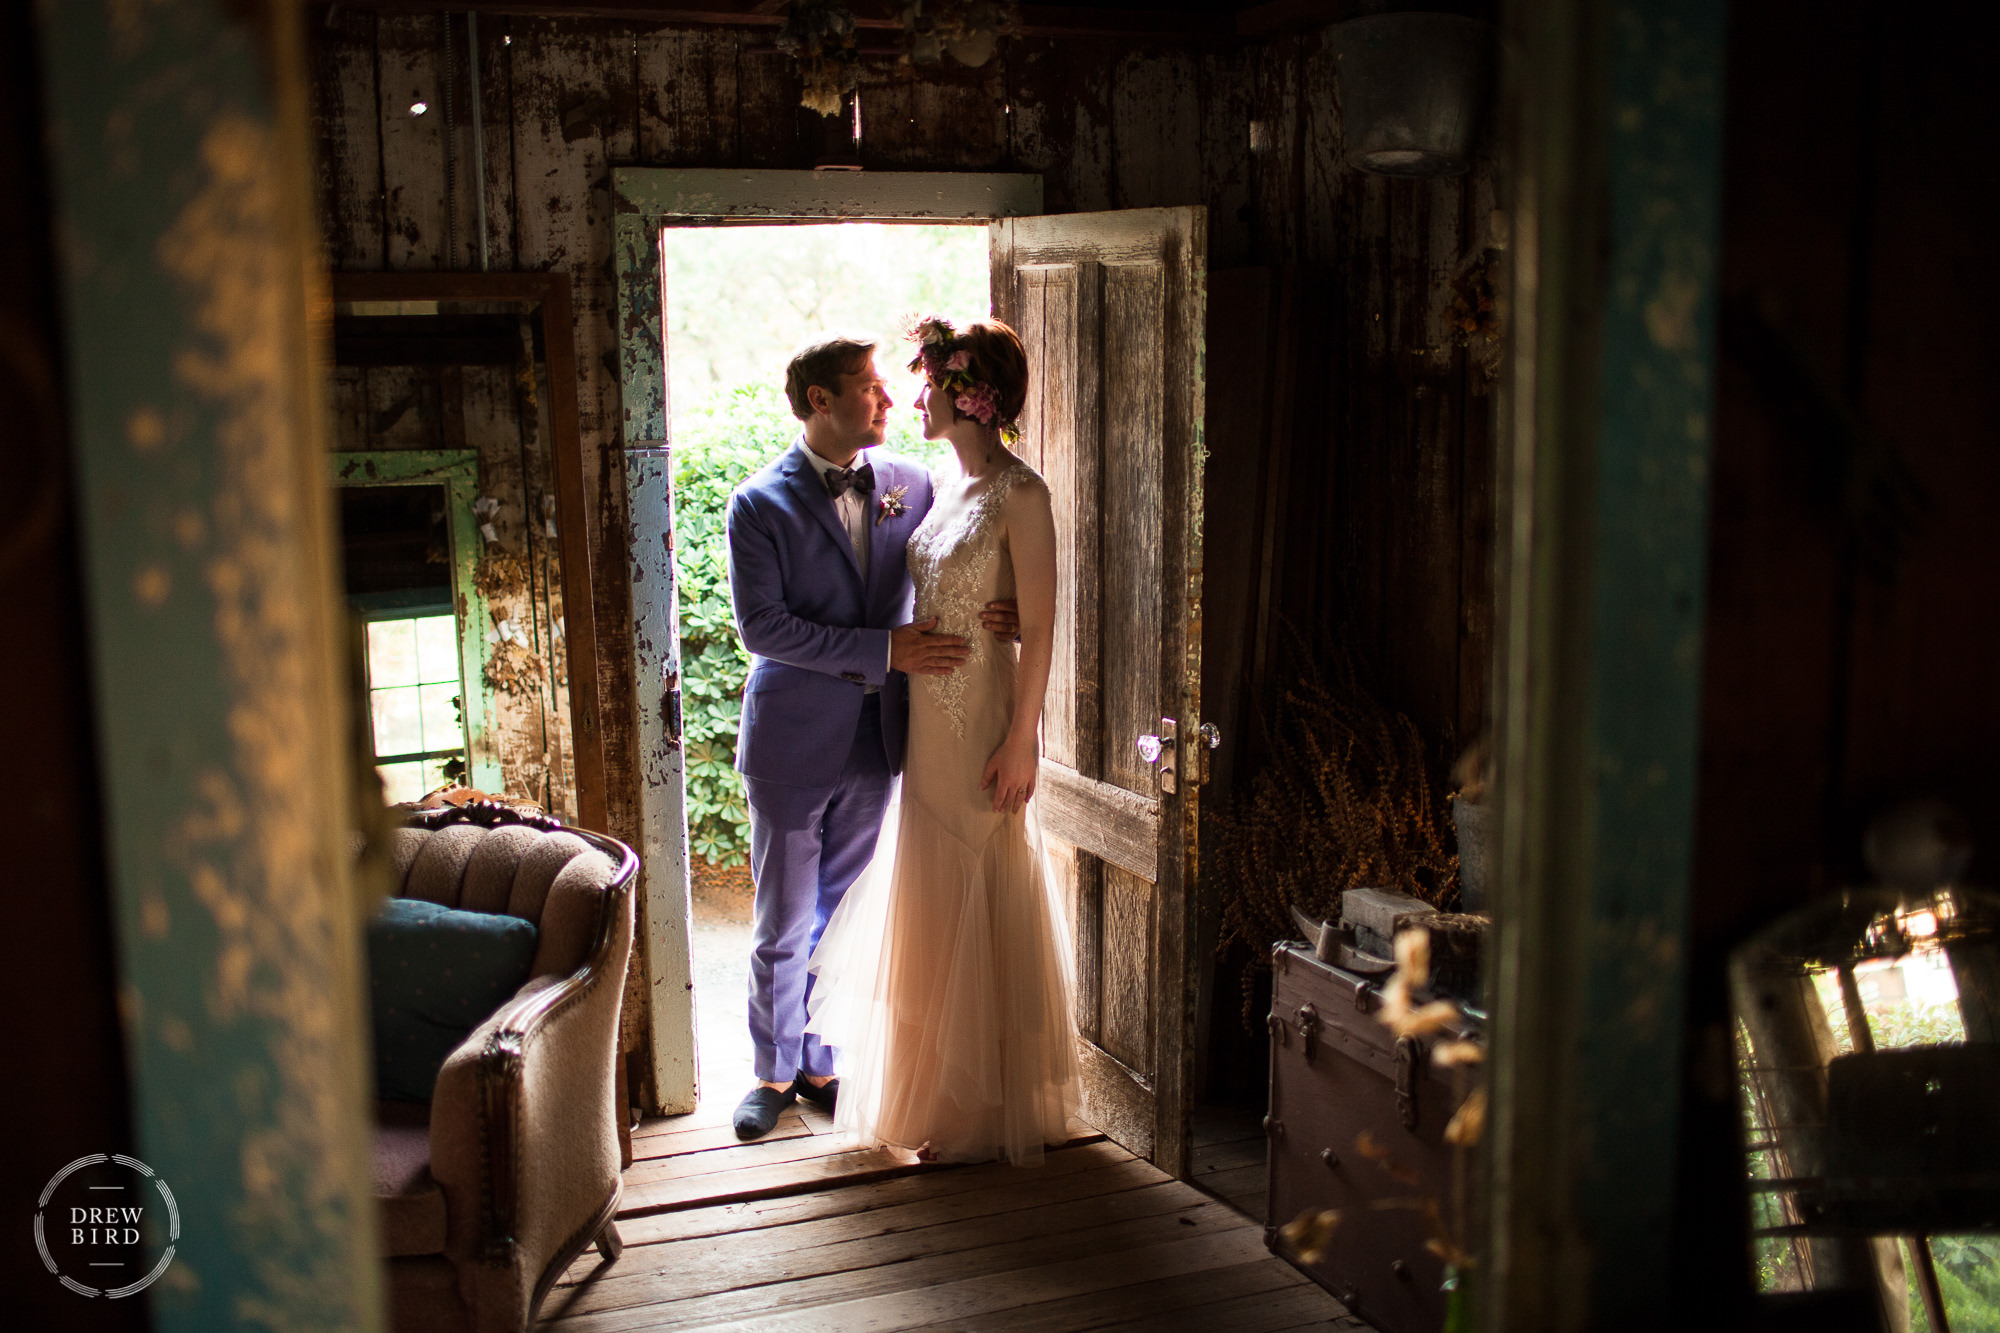 Park Winters rustic wedding venue and farm in Yolo County by wedding photographer Drew Bird.